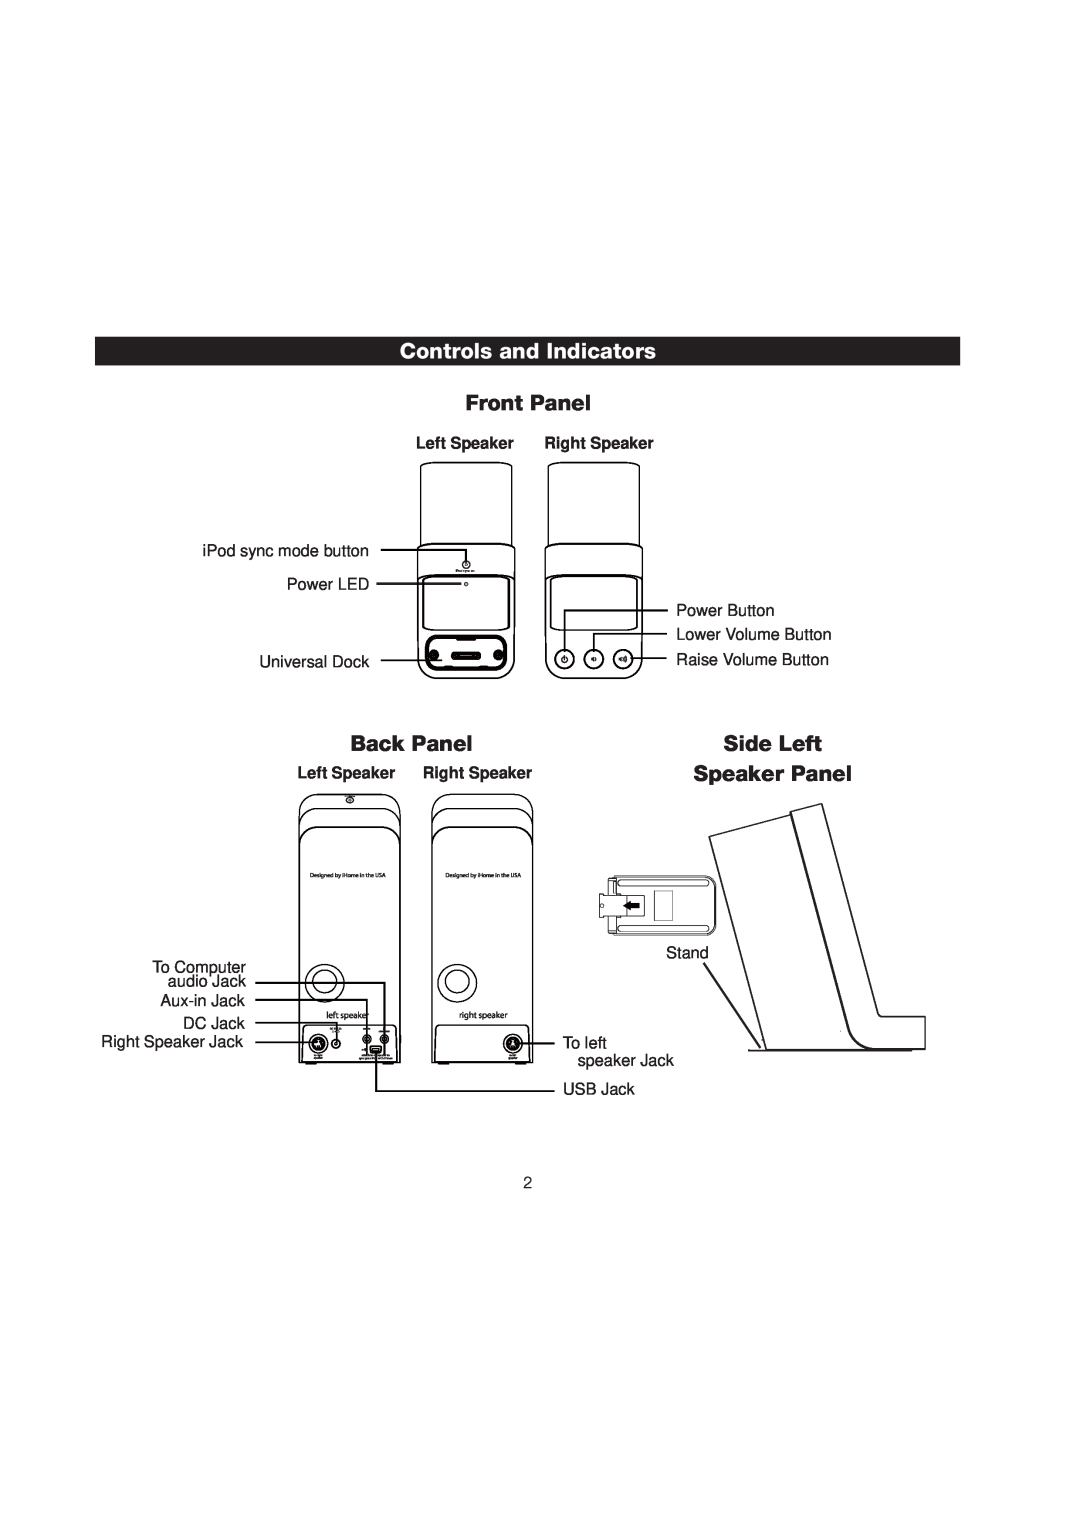 iHome iP71 manual Front Panel, Back Panel, Side Left, Speaker Panel, iPod sync on 